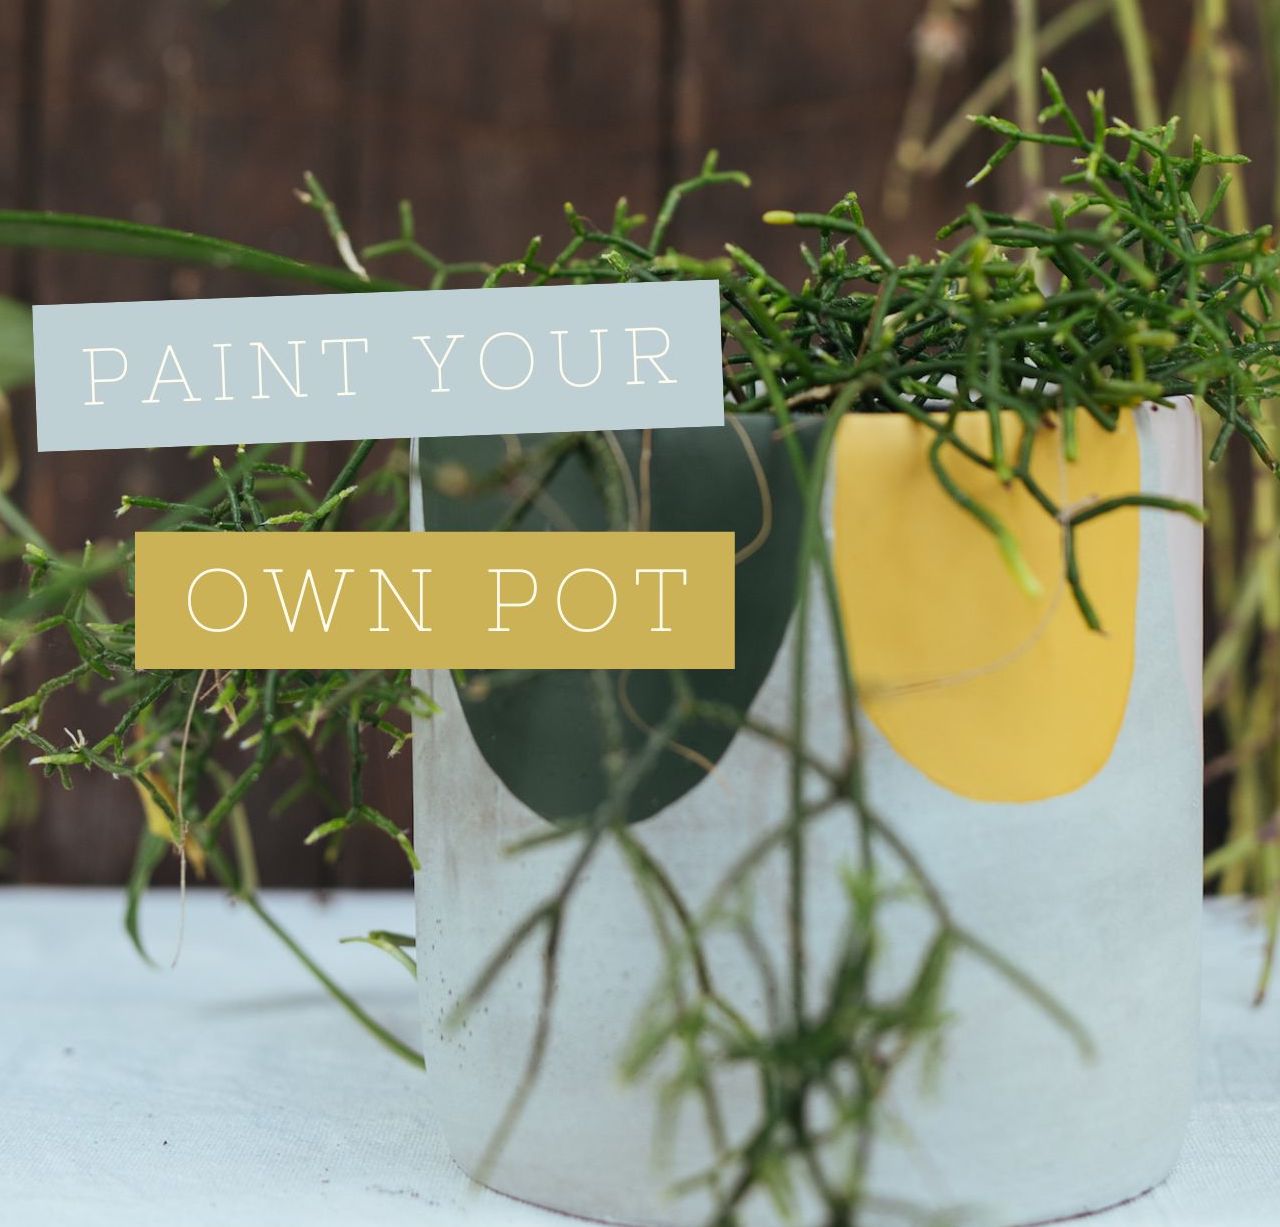 DIY Paint your own pot Kit with macrame